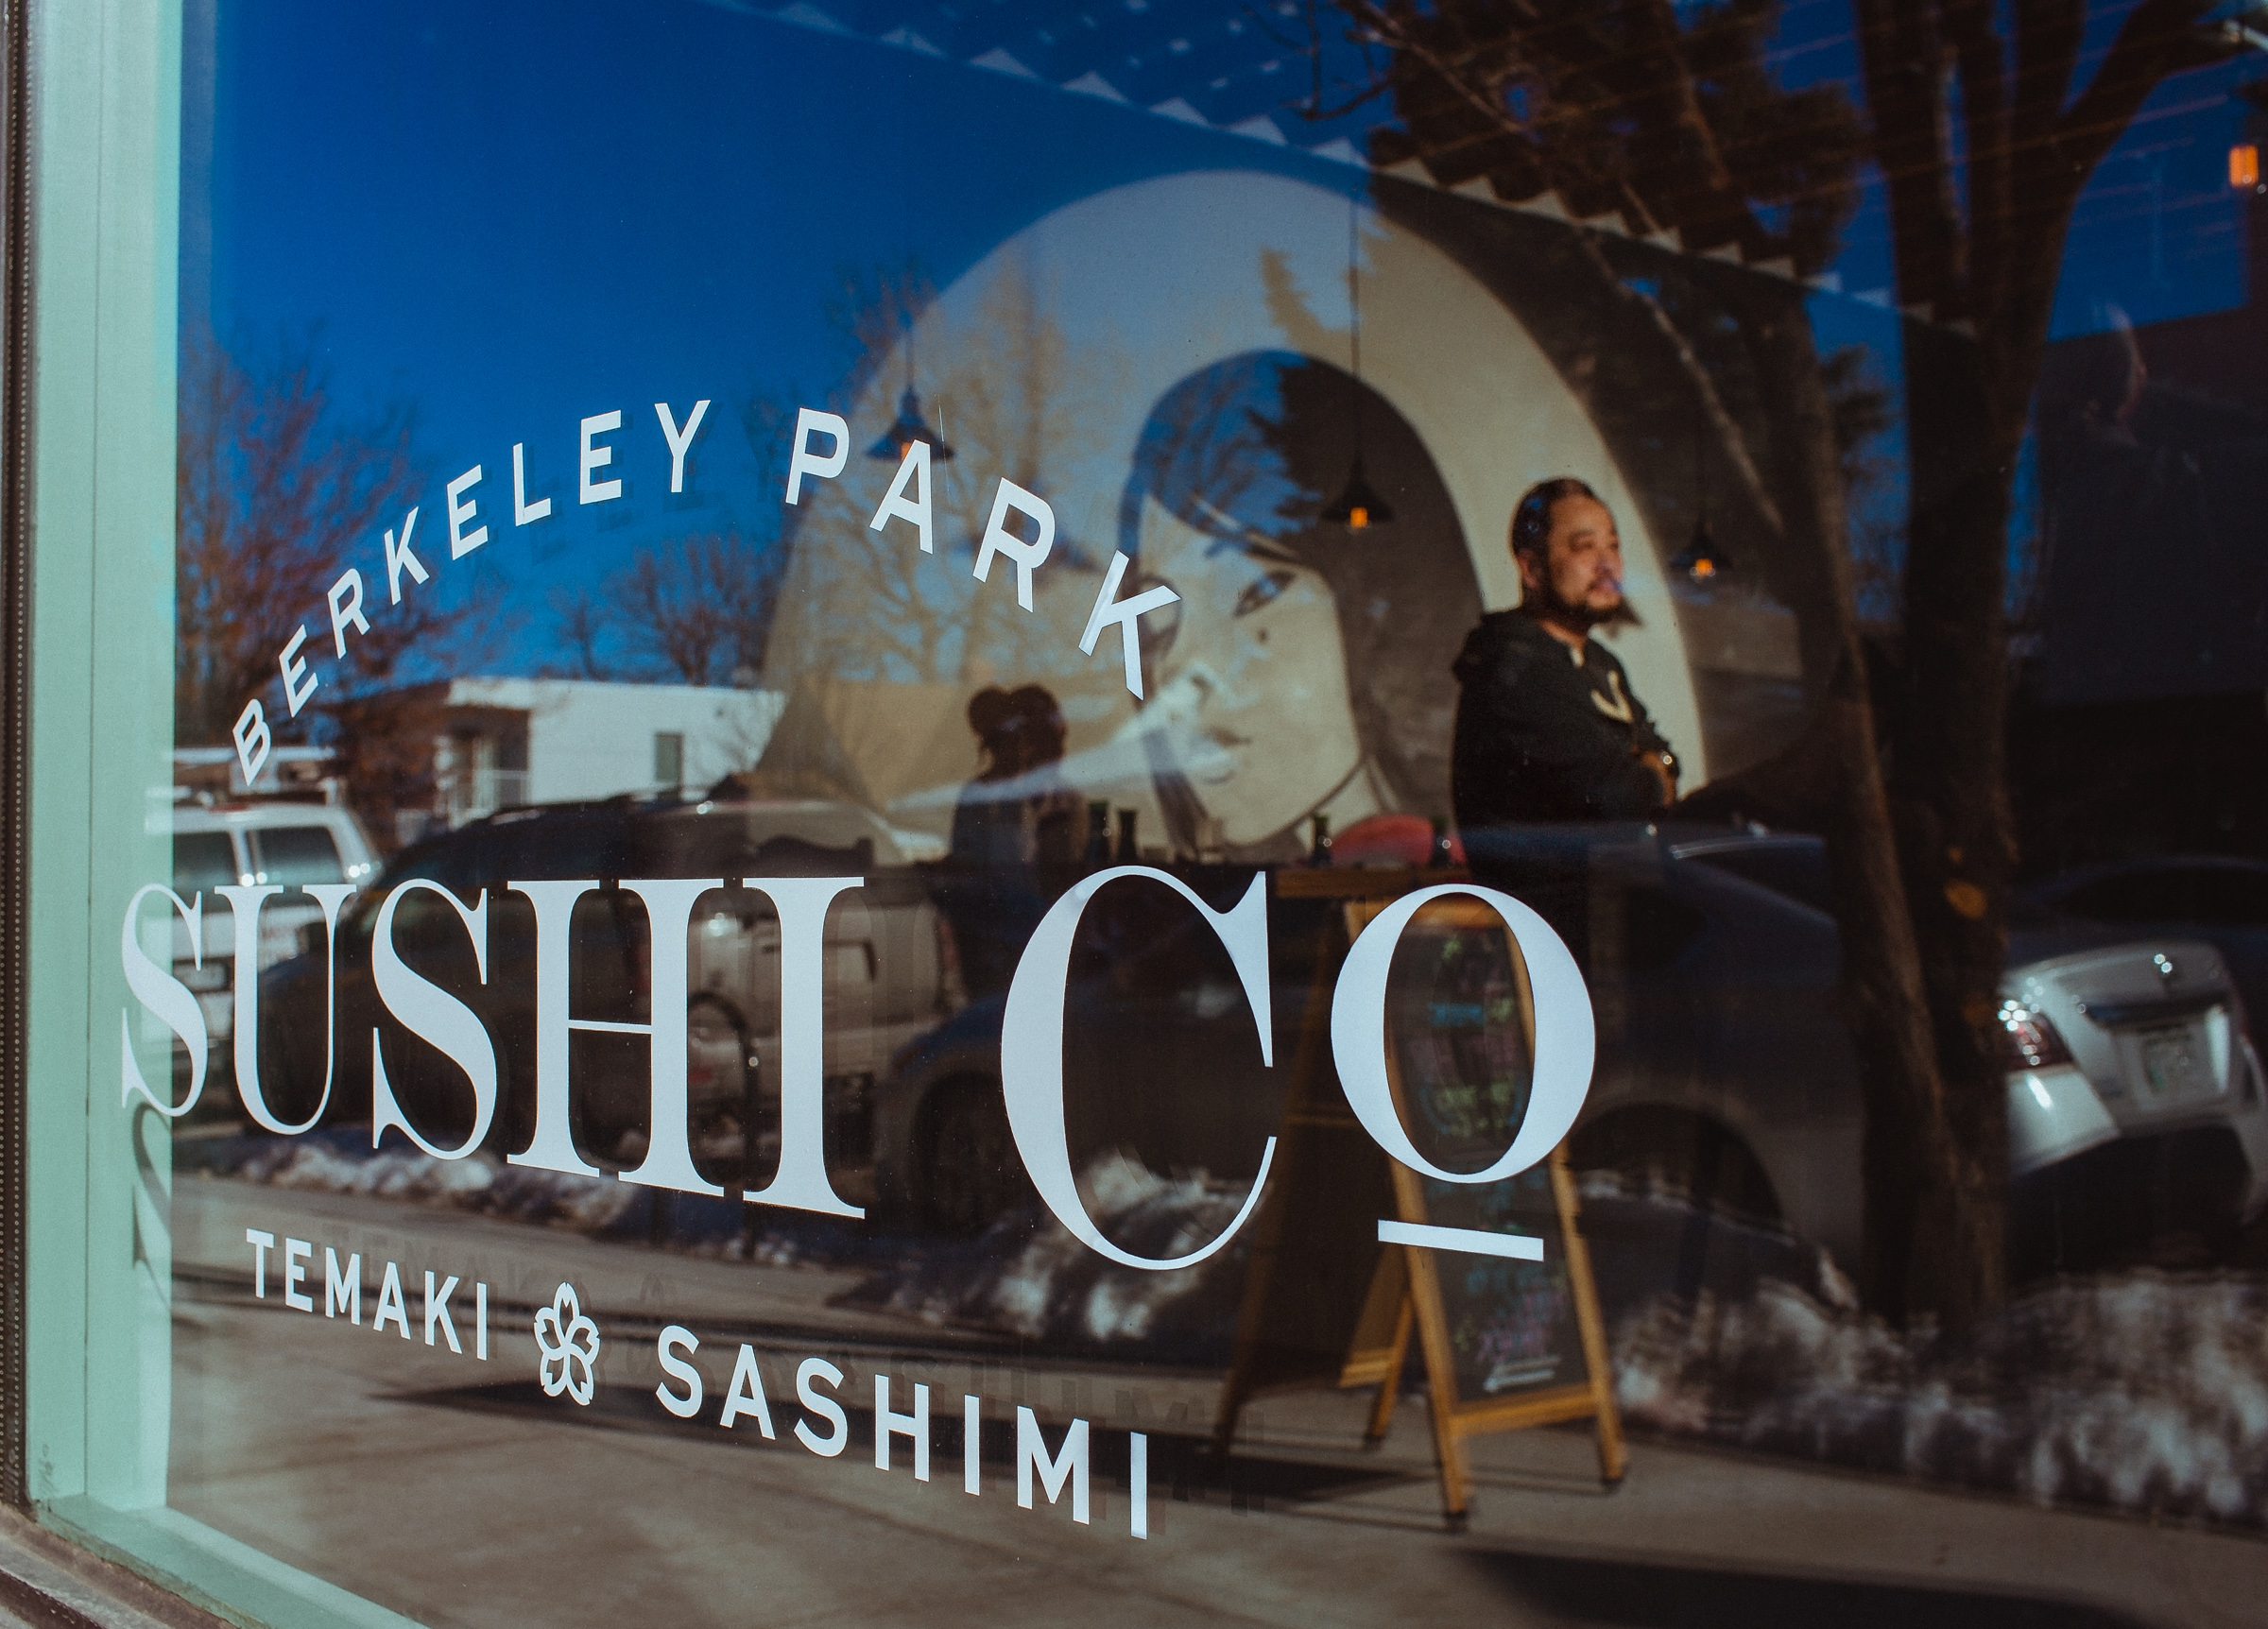 Berkeley Park Sushi Co